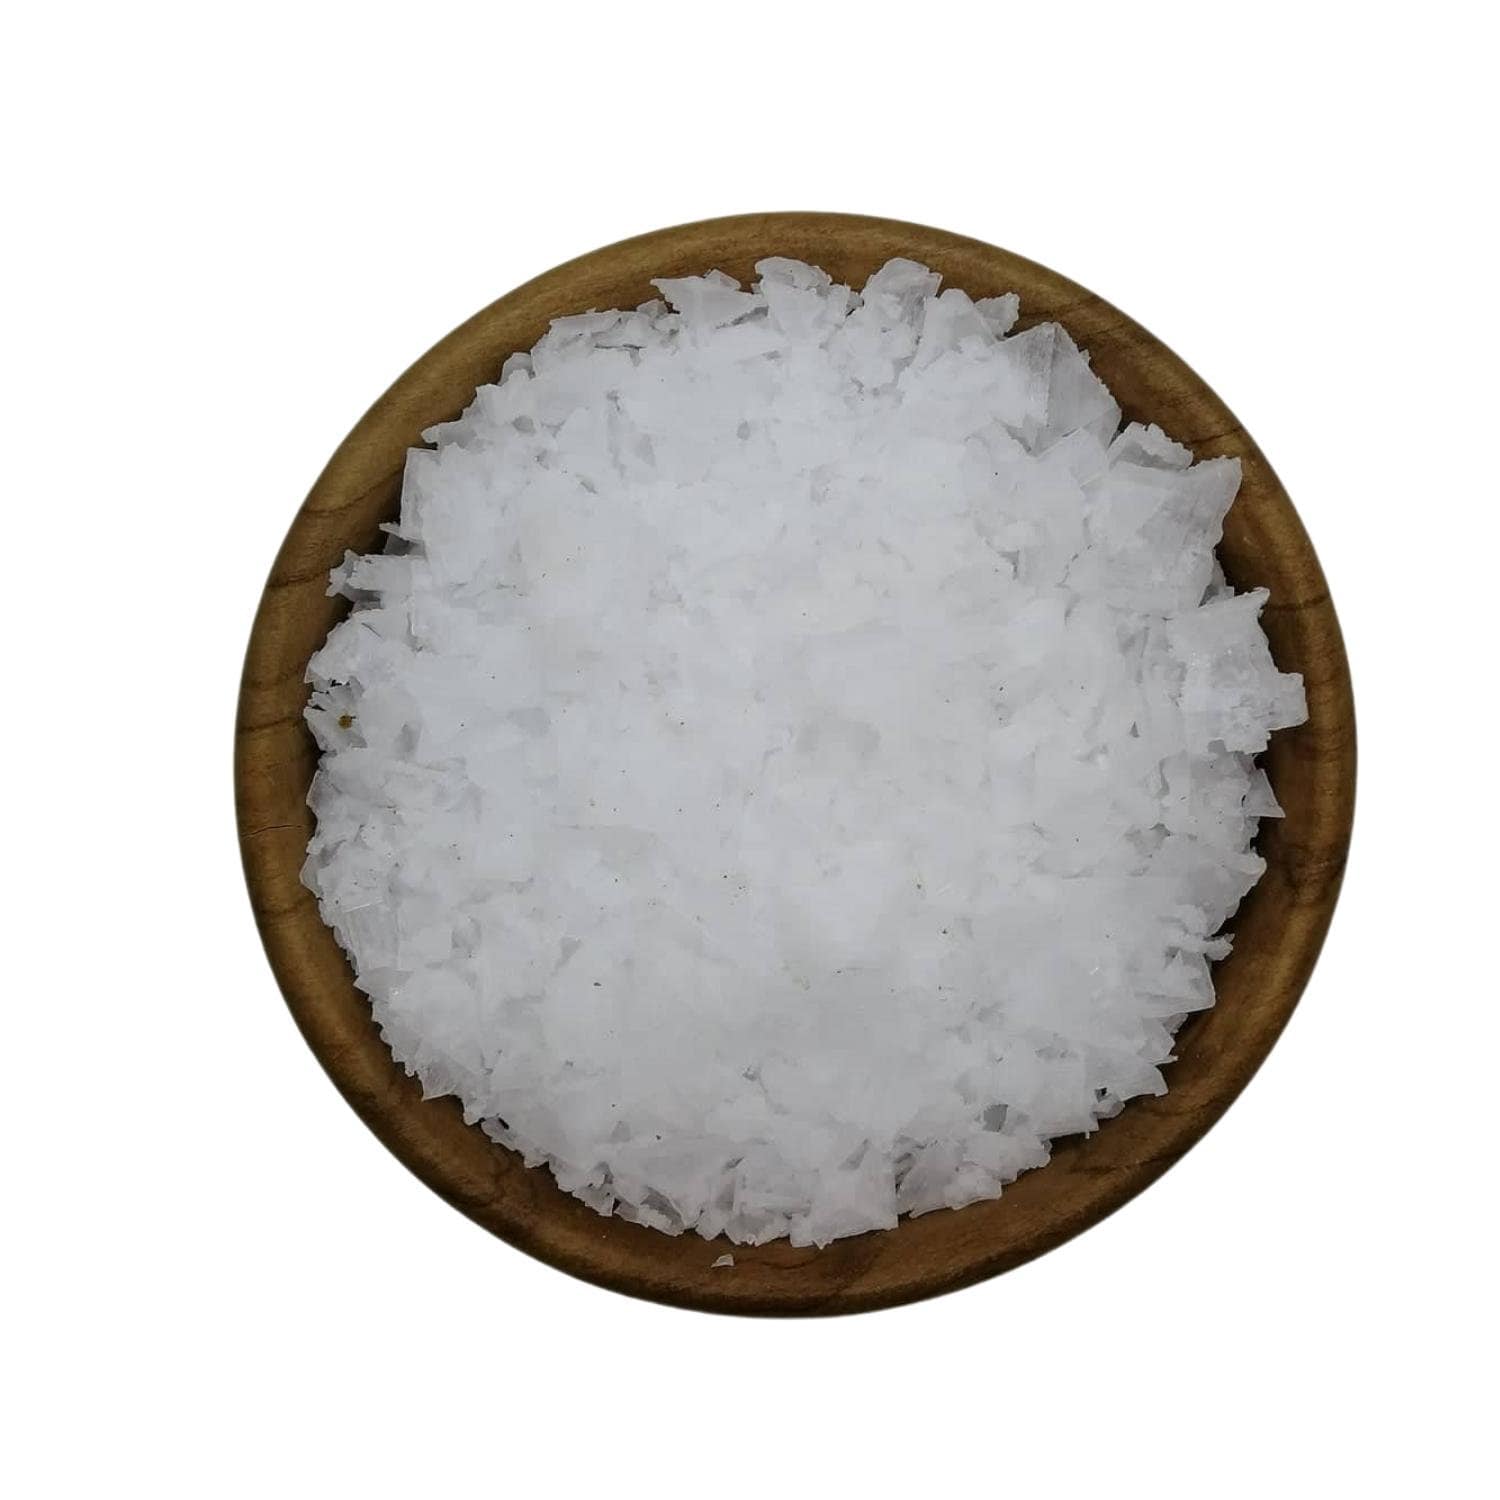 Assortiment de sels de Maldon - Maldon Crystal Salt